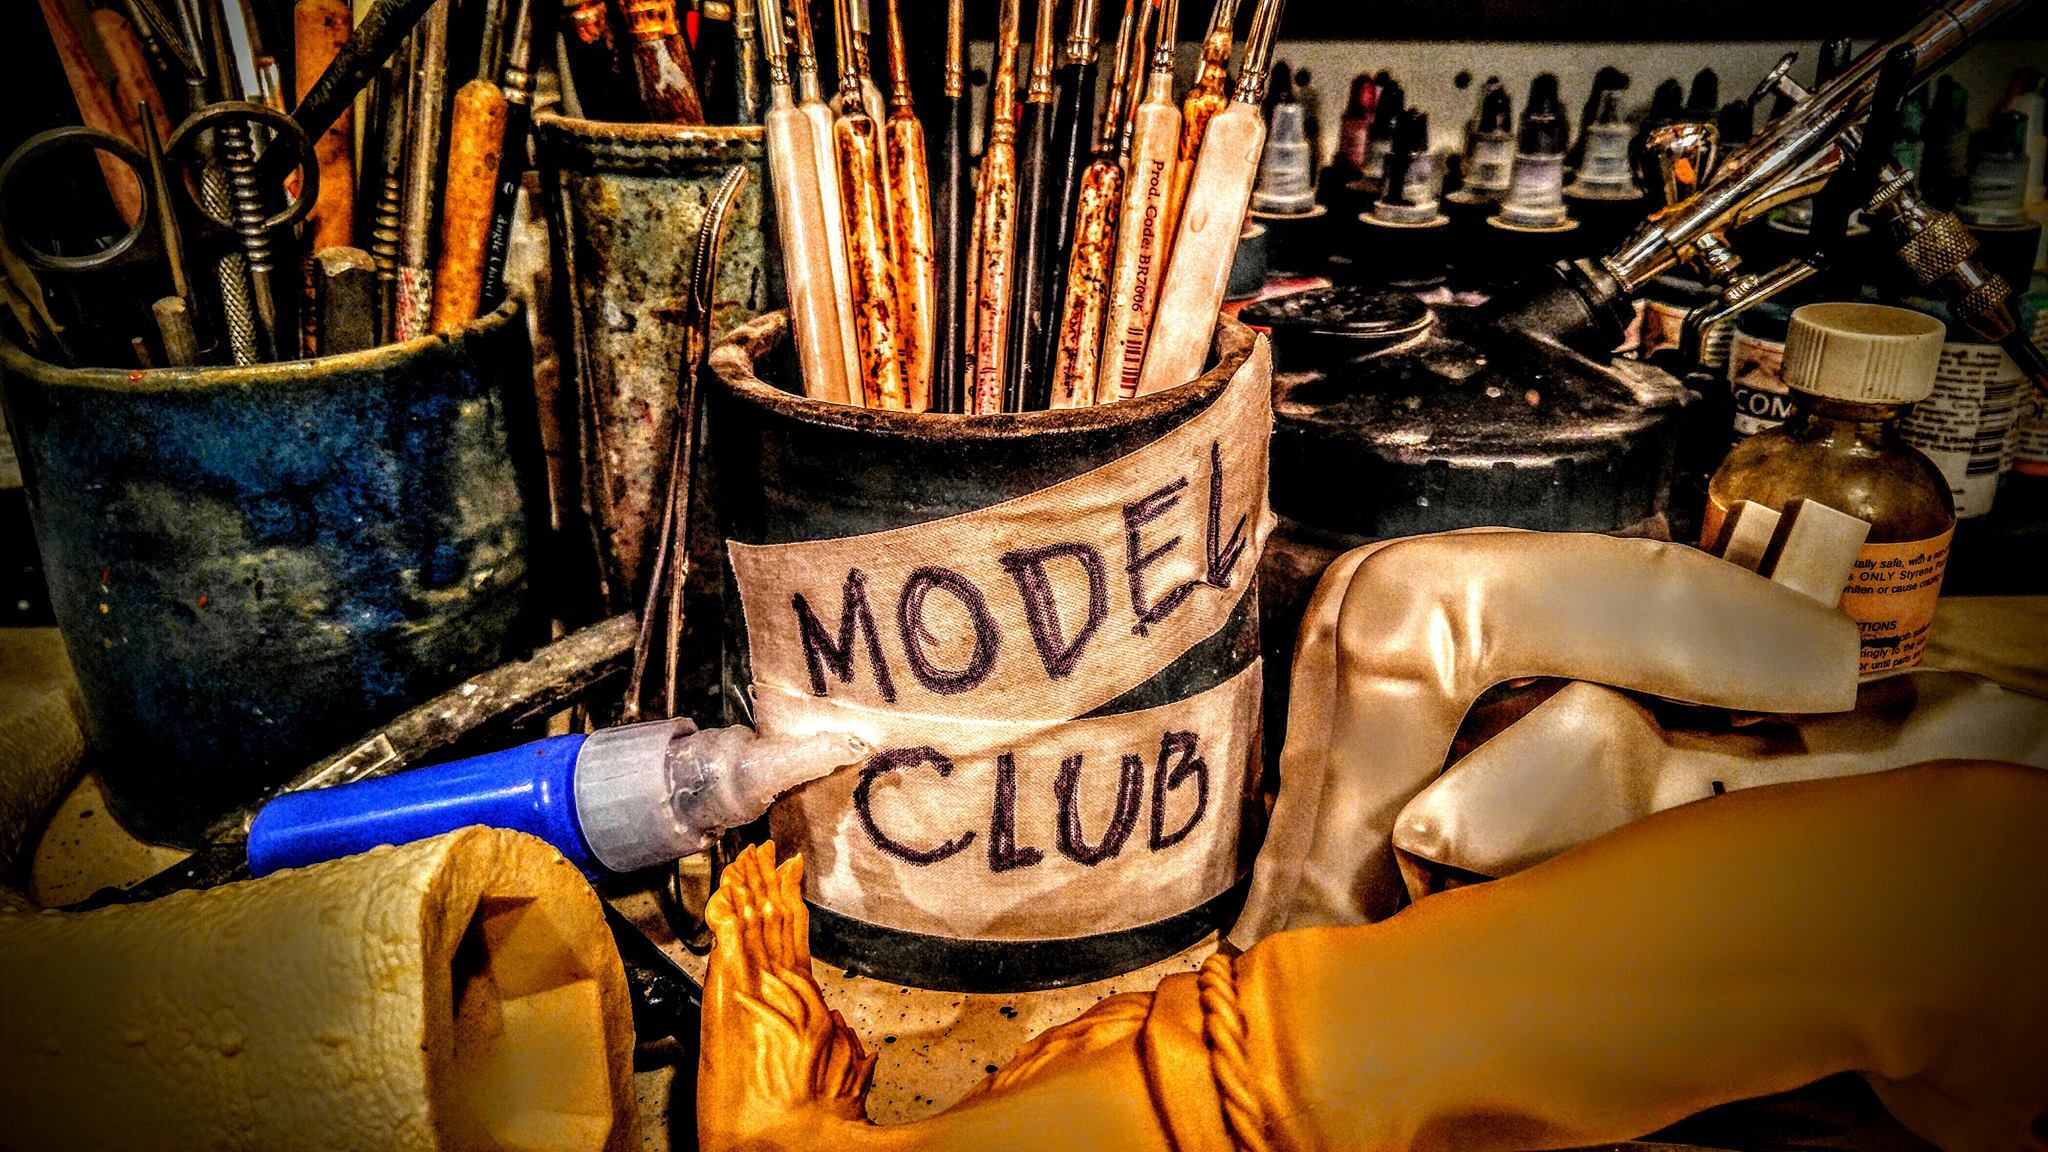 Model Club TV